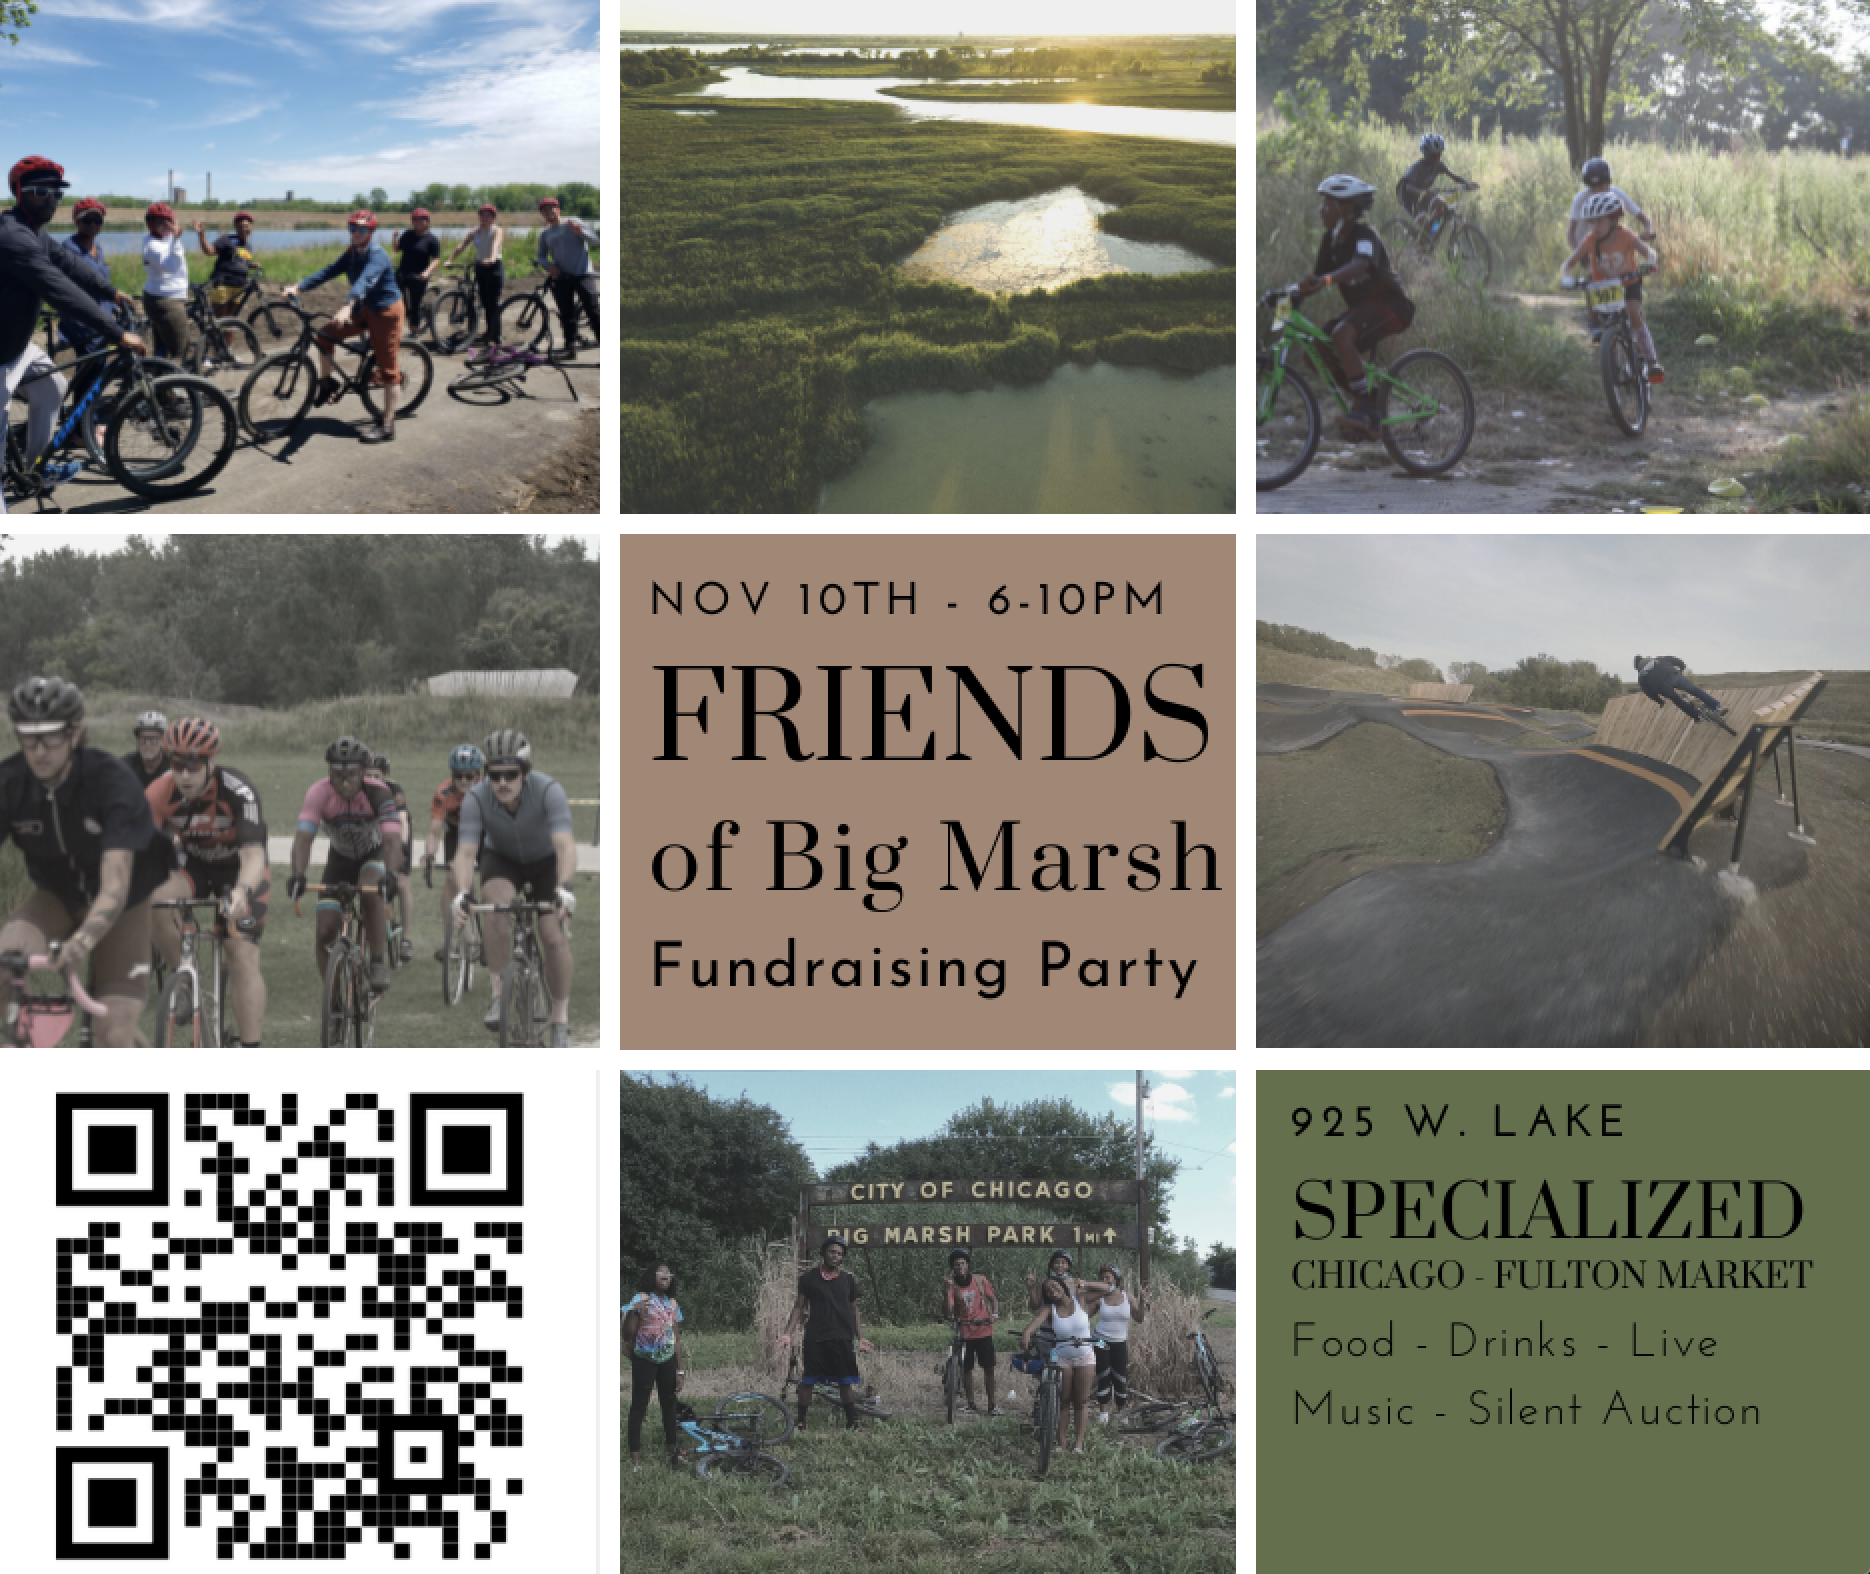 Fundraising party for Big Marsh Park – Big Marsh